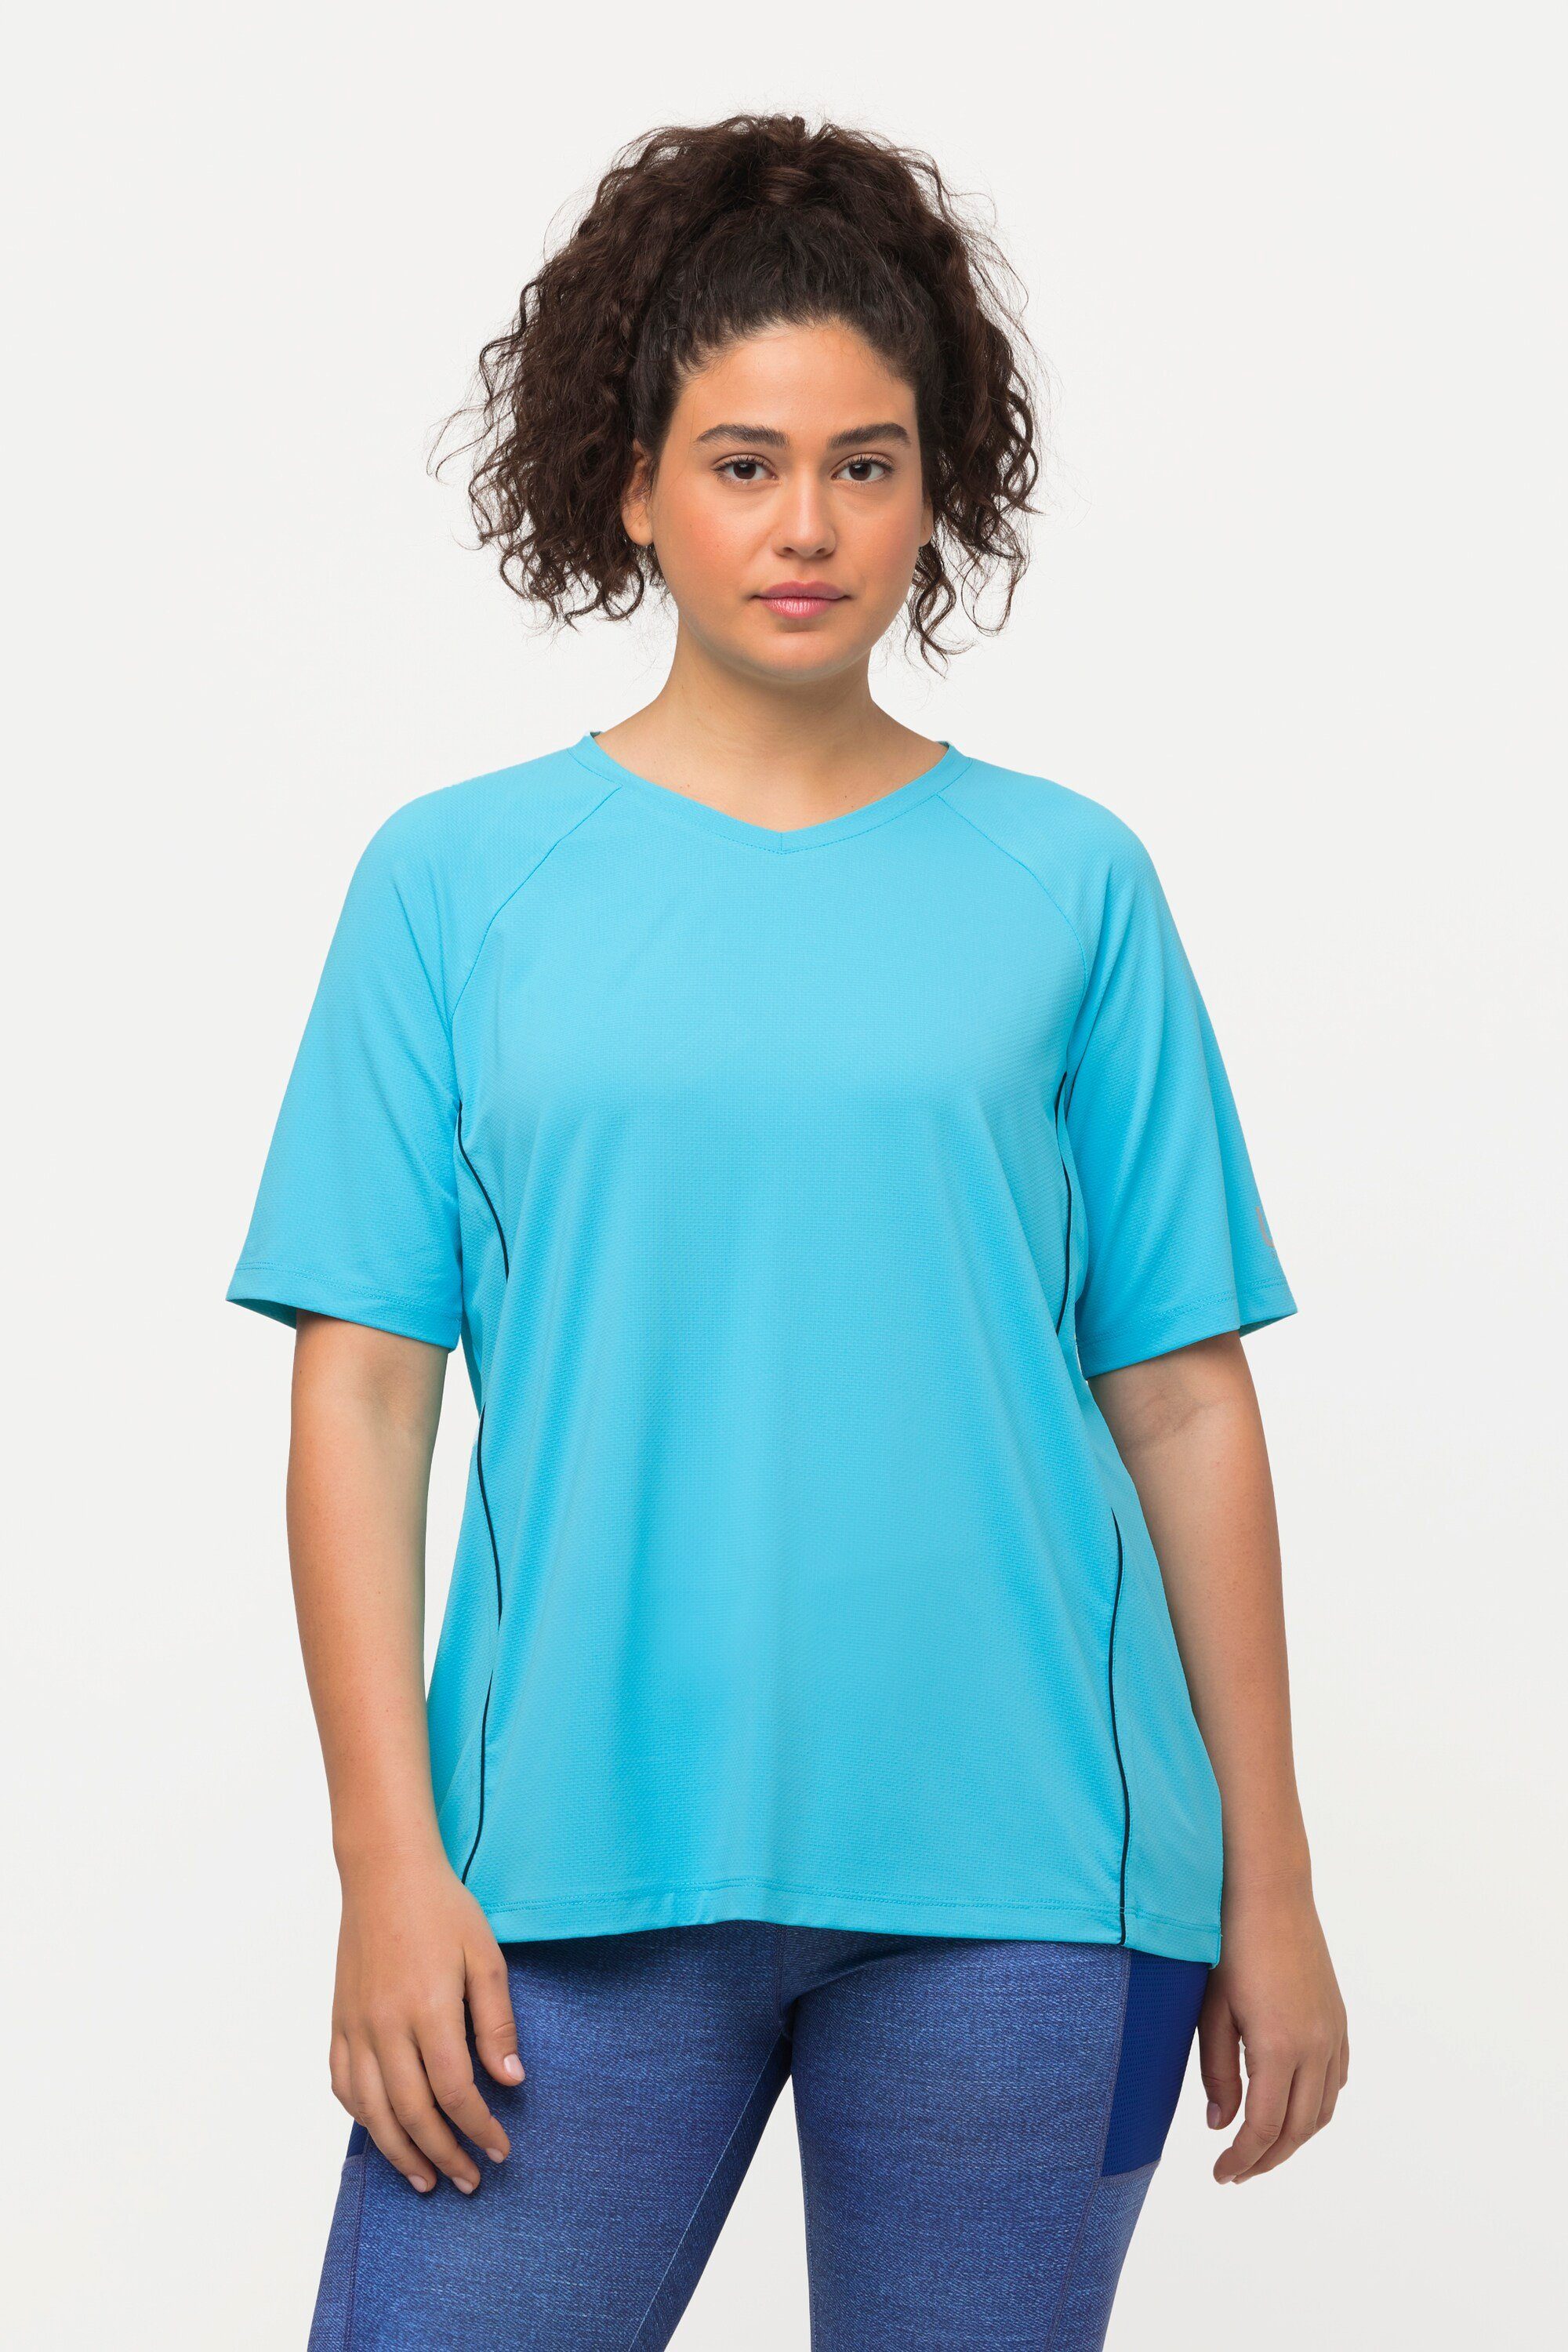 UV-Schutz V-Ausschnitt türkis T-Shirt Popken Rundhalsshirt Halbarm helles Ulla 50+